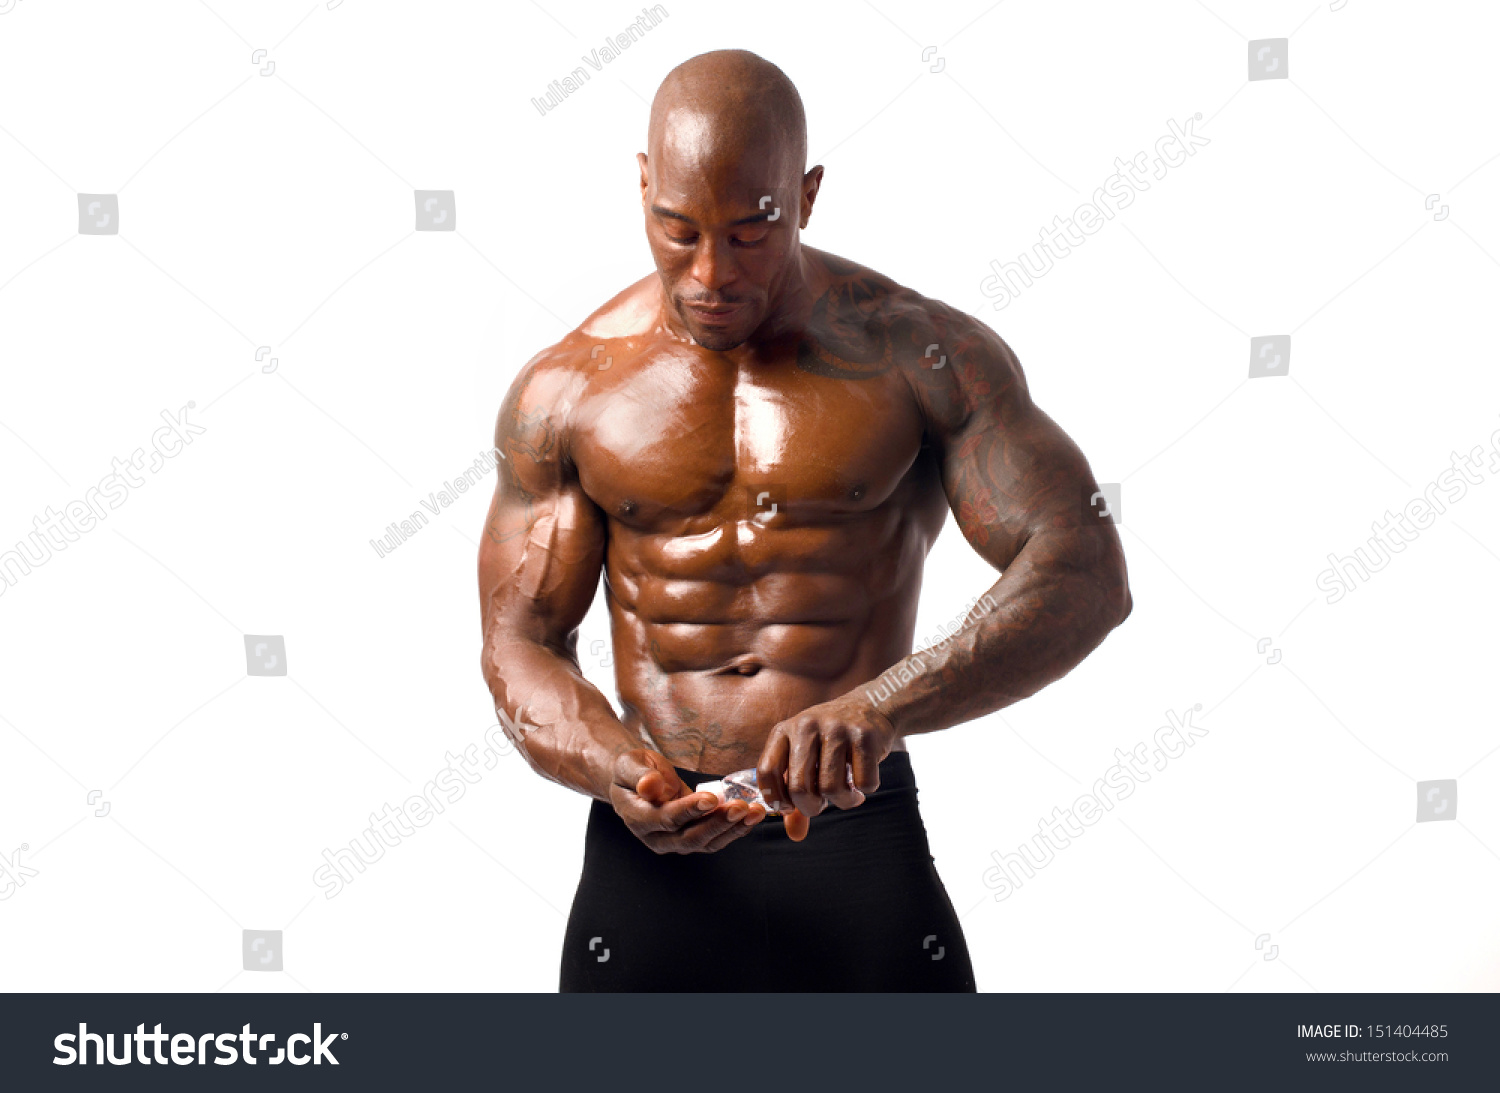 Black Bodybuilder Pouring Oil On His Stock Photo (Edit Now) 151404485